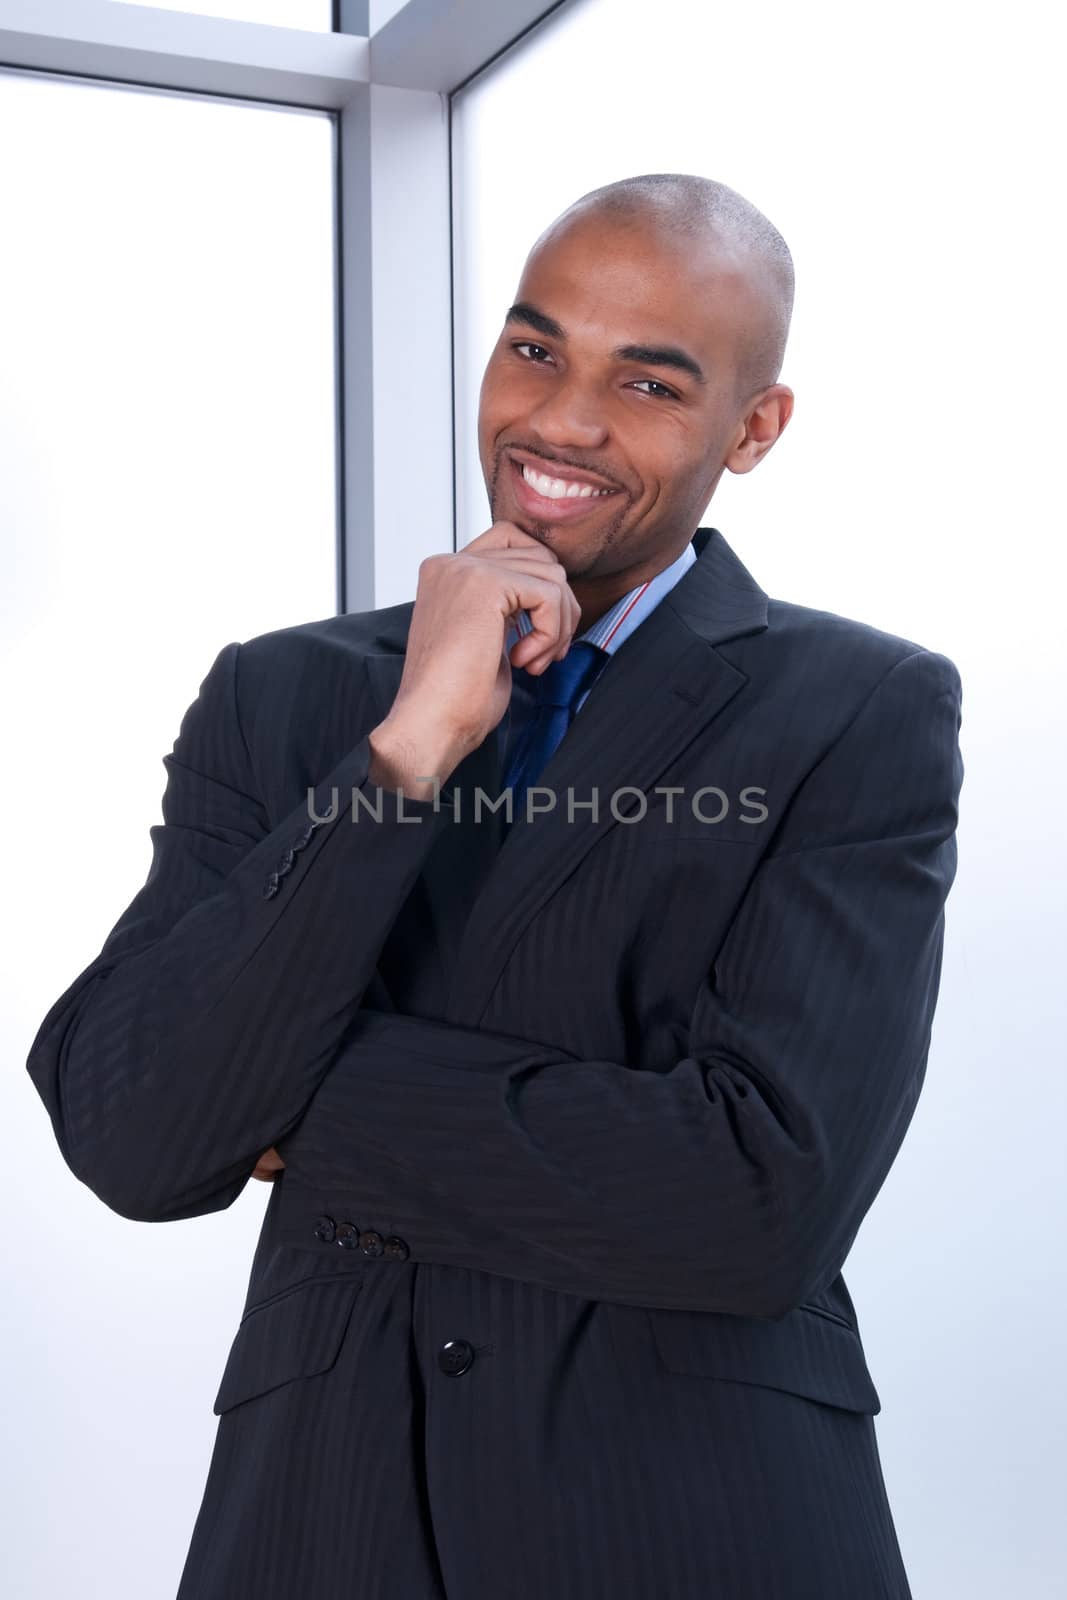 Smiling charismatic businessman by anikasalsera